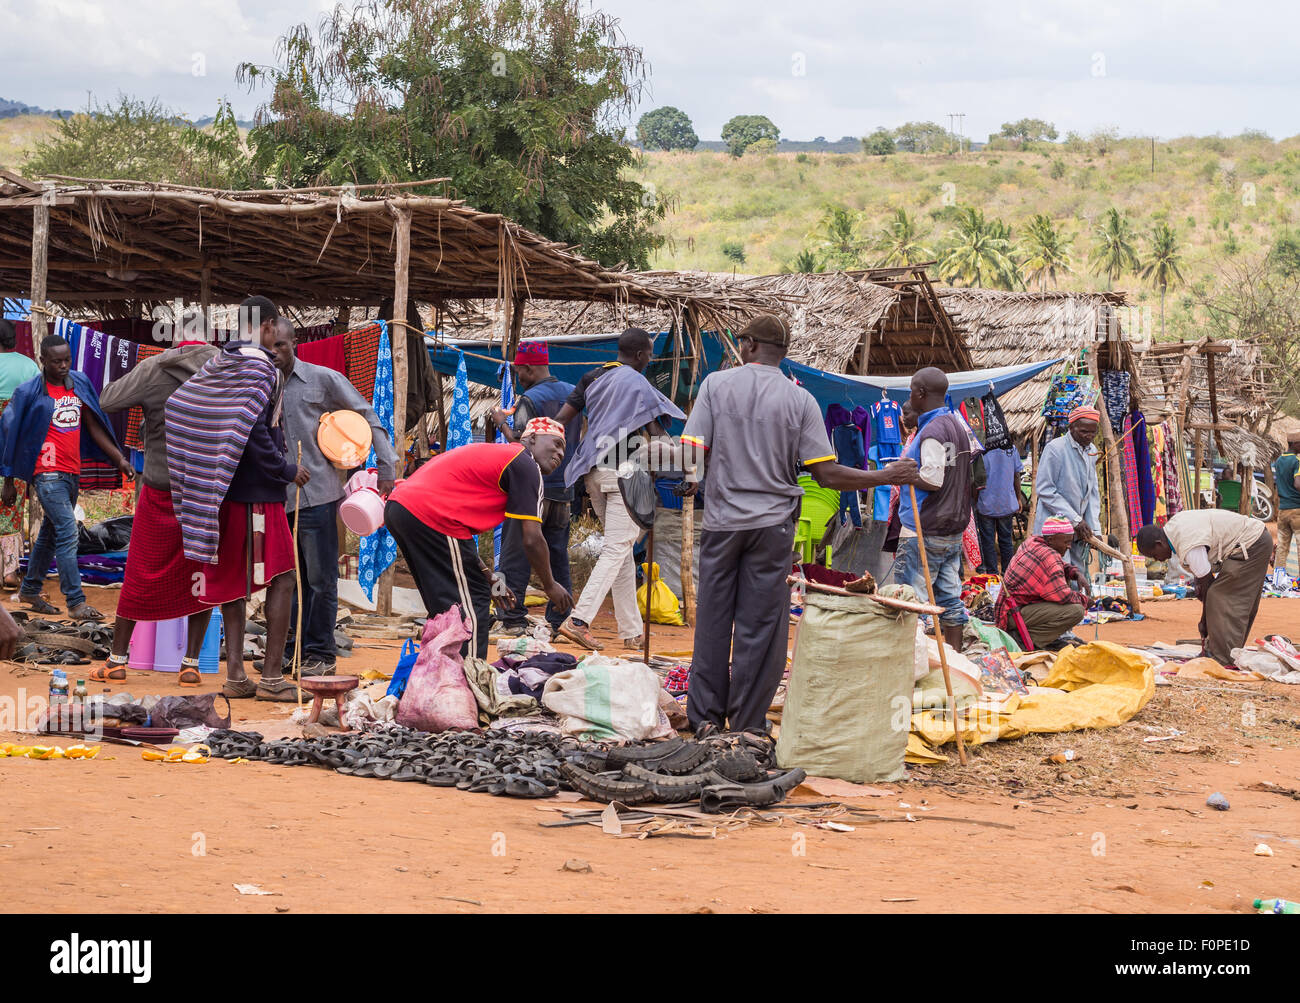 Weekly Saturday Maasai market in Handeni region, Tanzania, Africa. Stock Photo